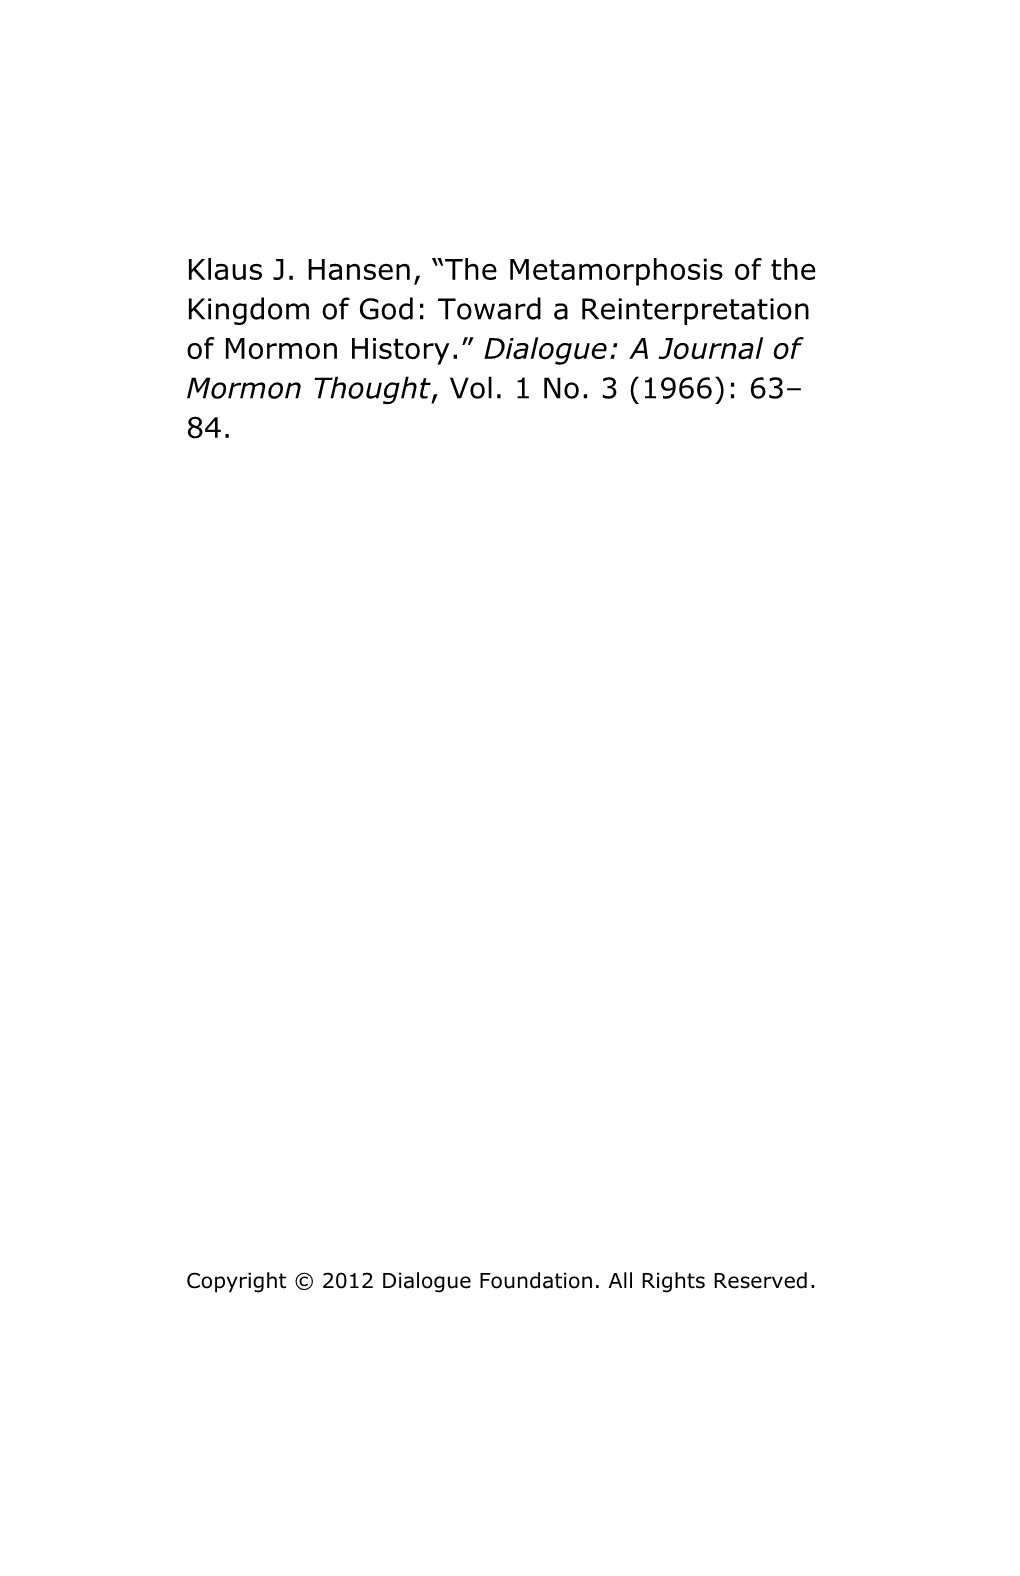 Klaus J. Hansen, “The Metamorphosis of the Kingdom of God: Toward a Reinterpretation of Mormon History.” Dialogue: a Journal of Mormon Thought, Vol